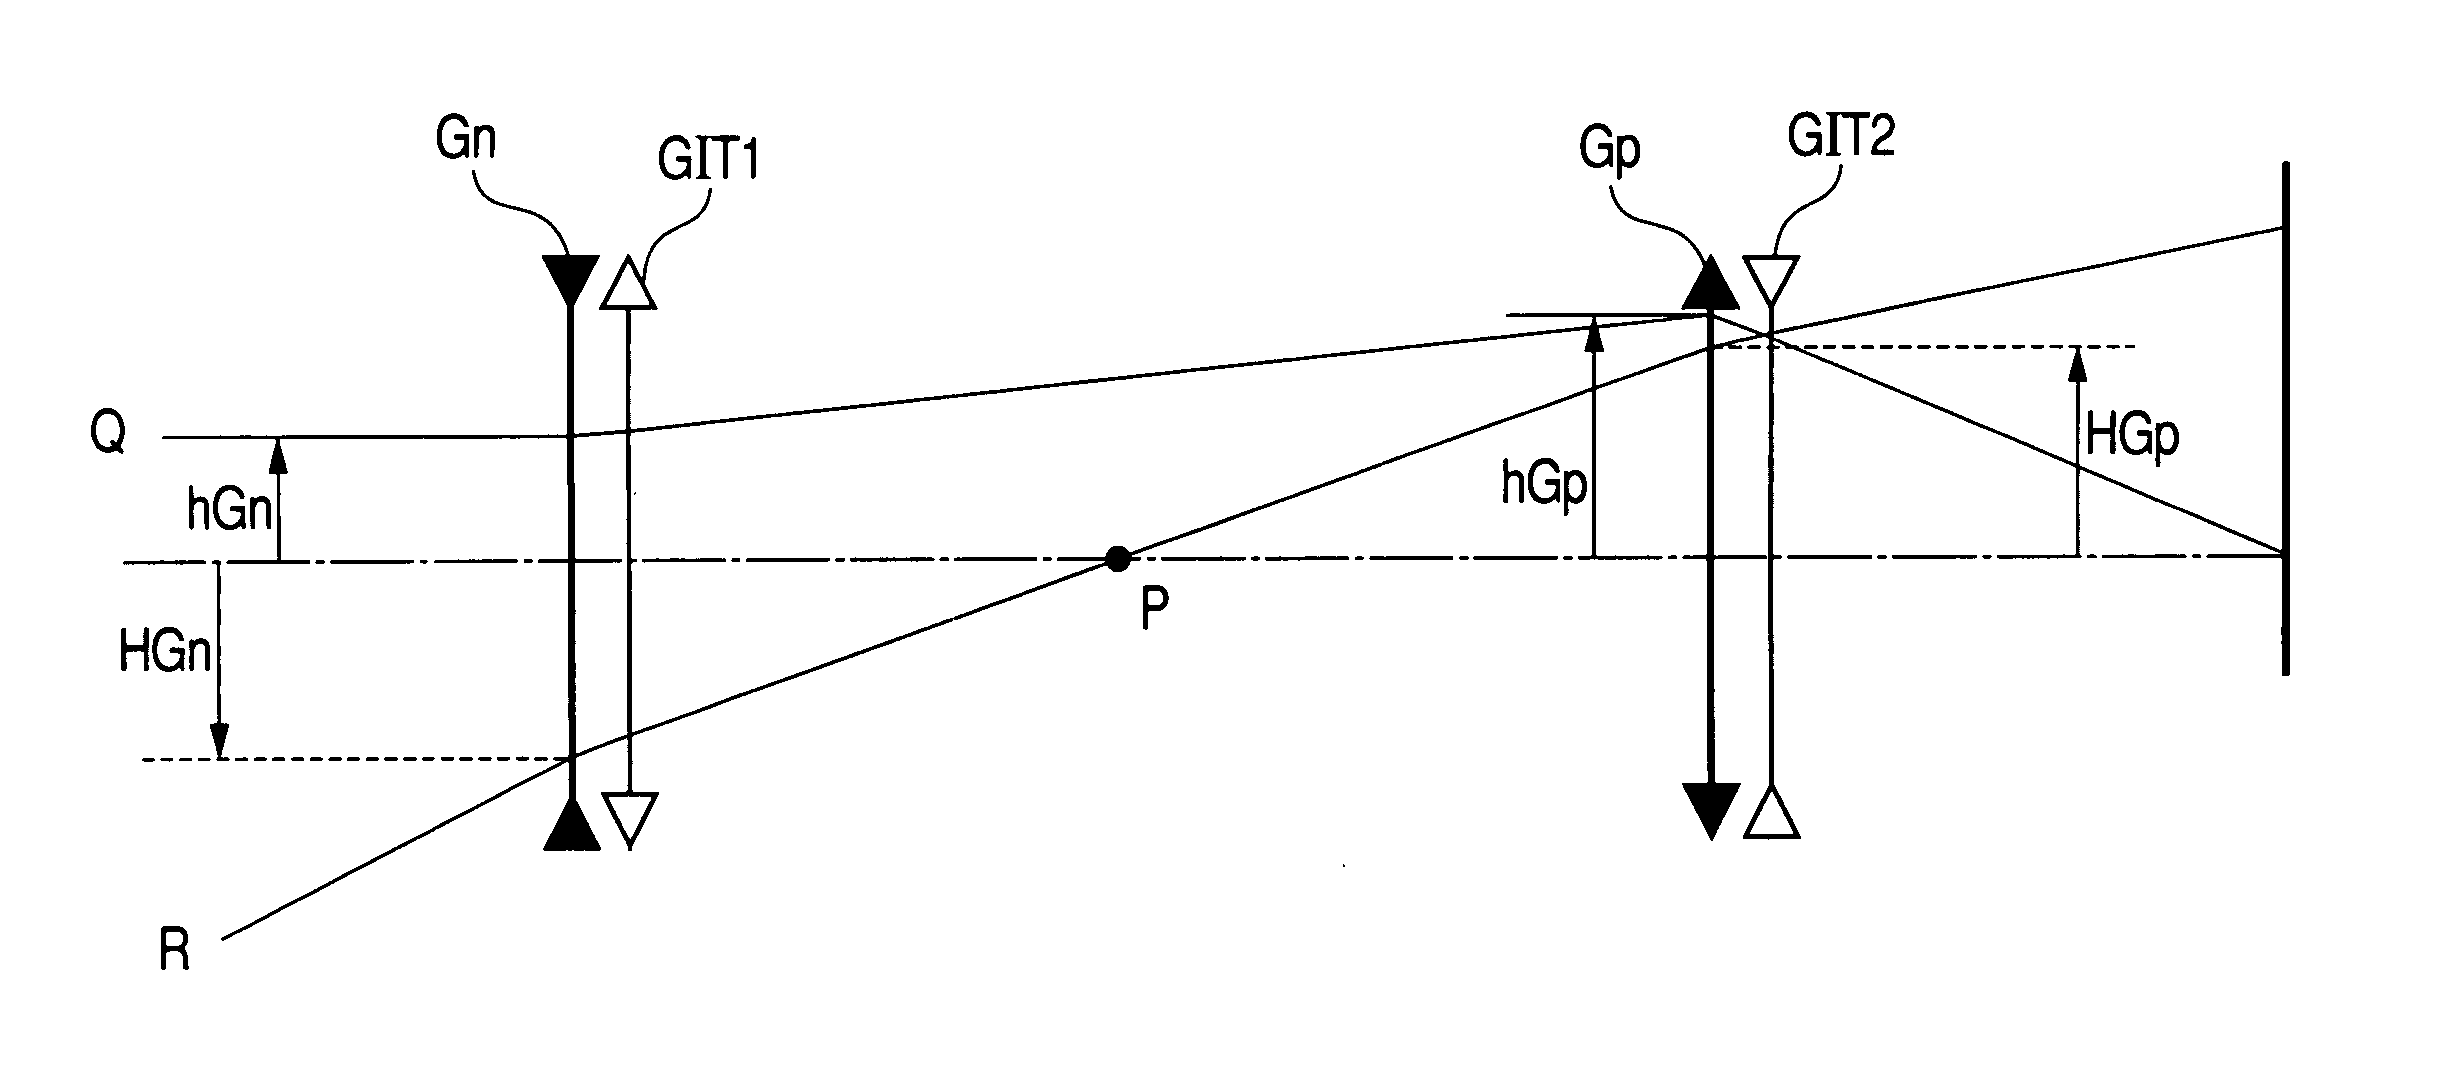 Retrofocus type optical system